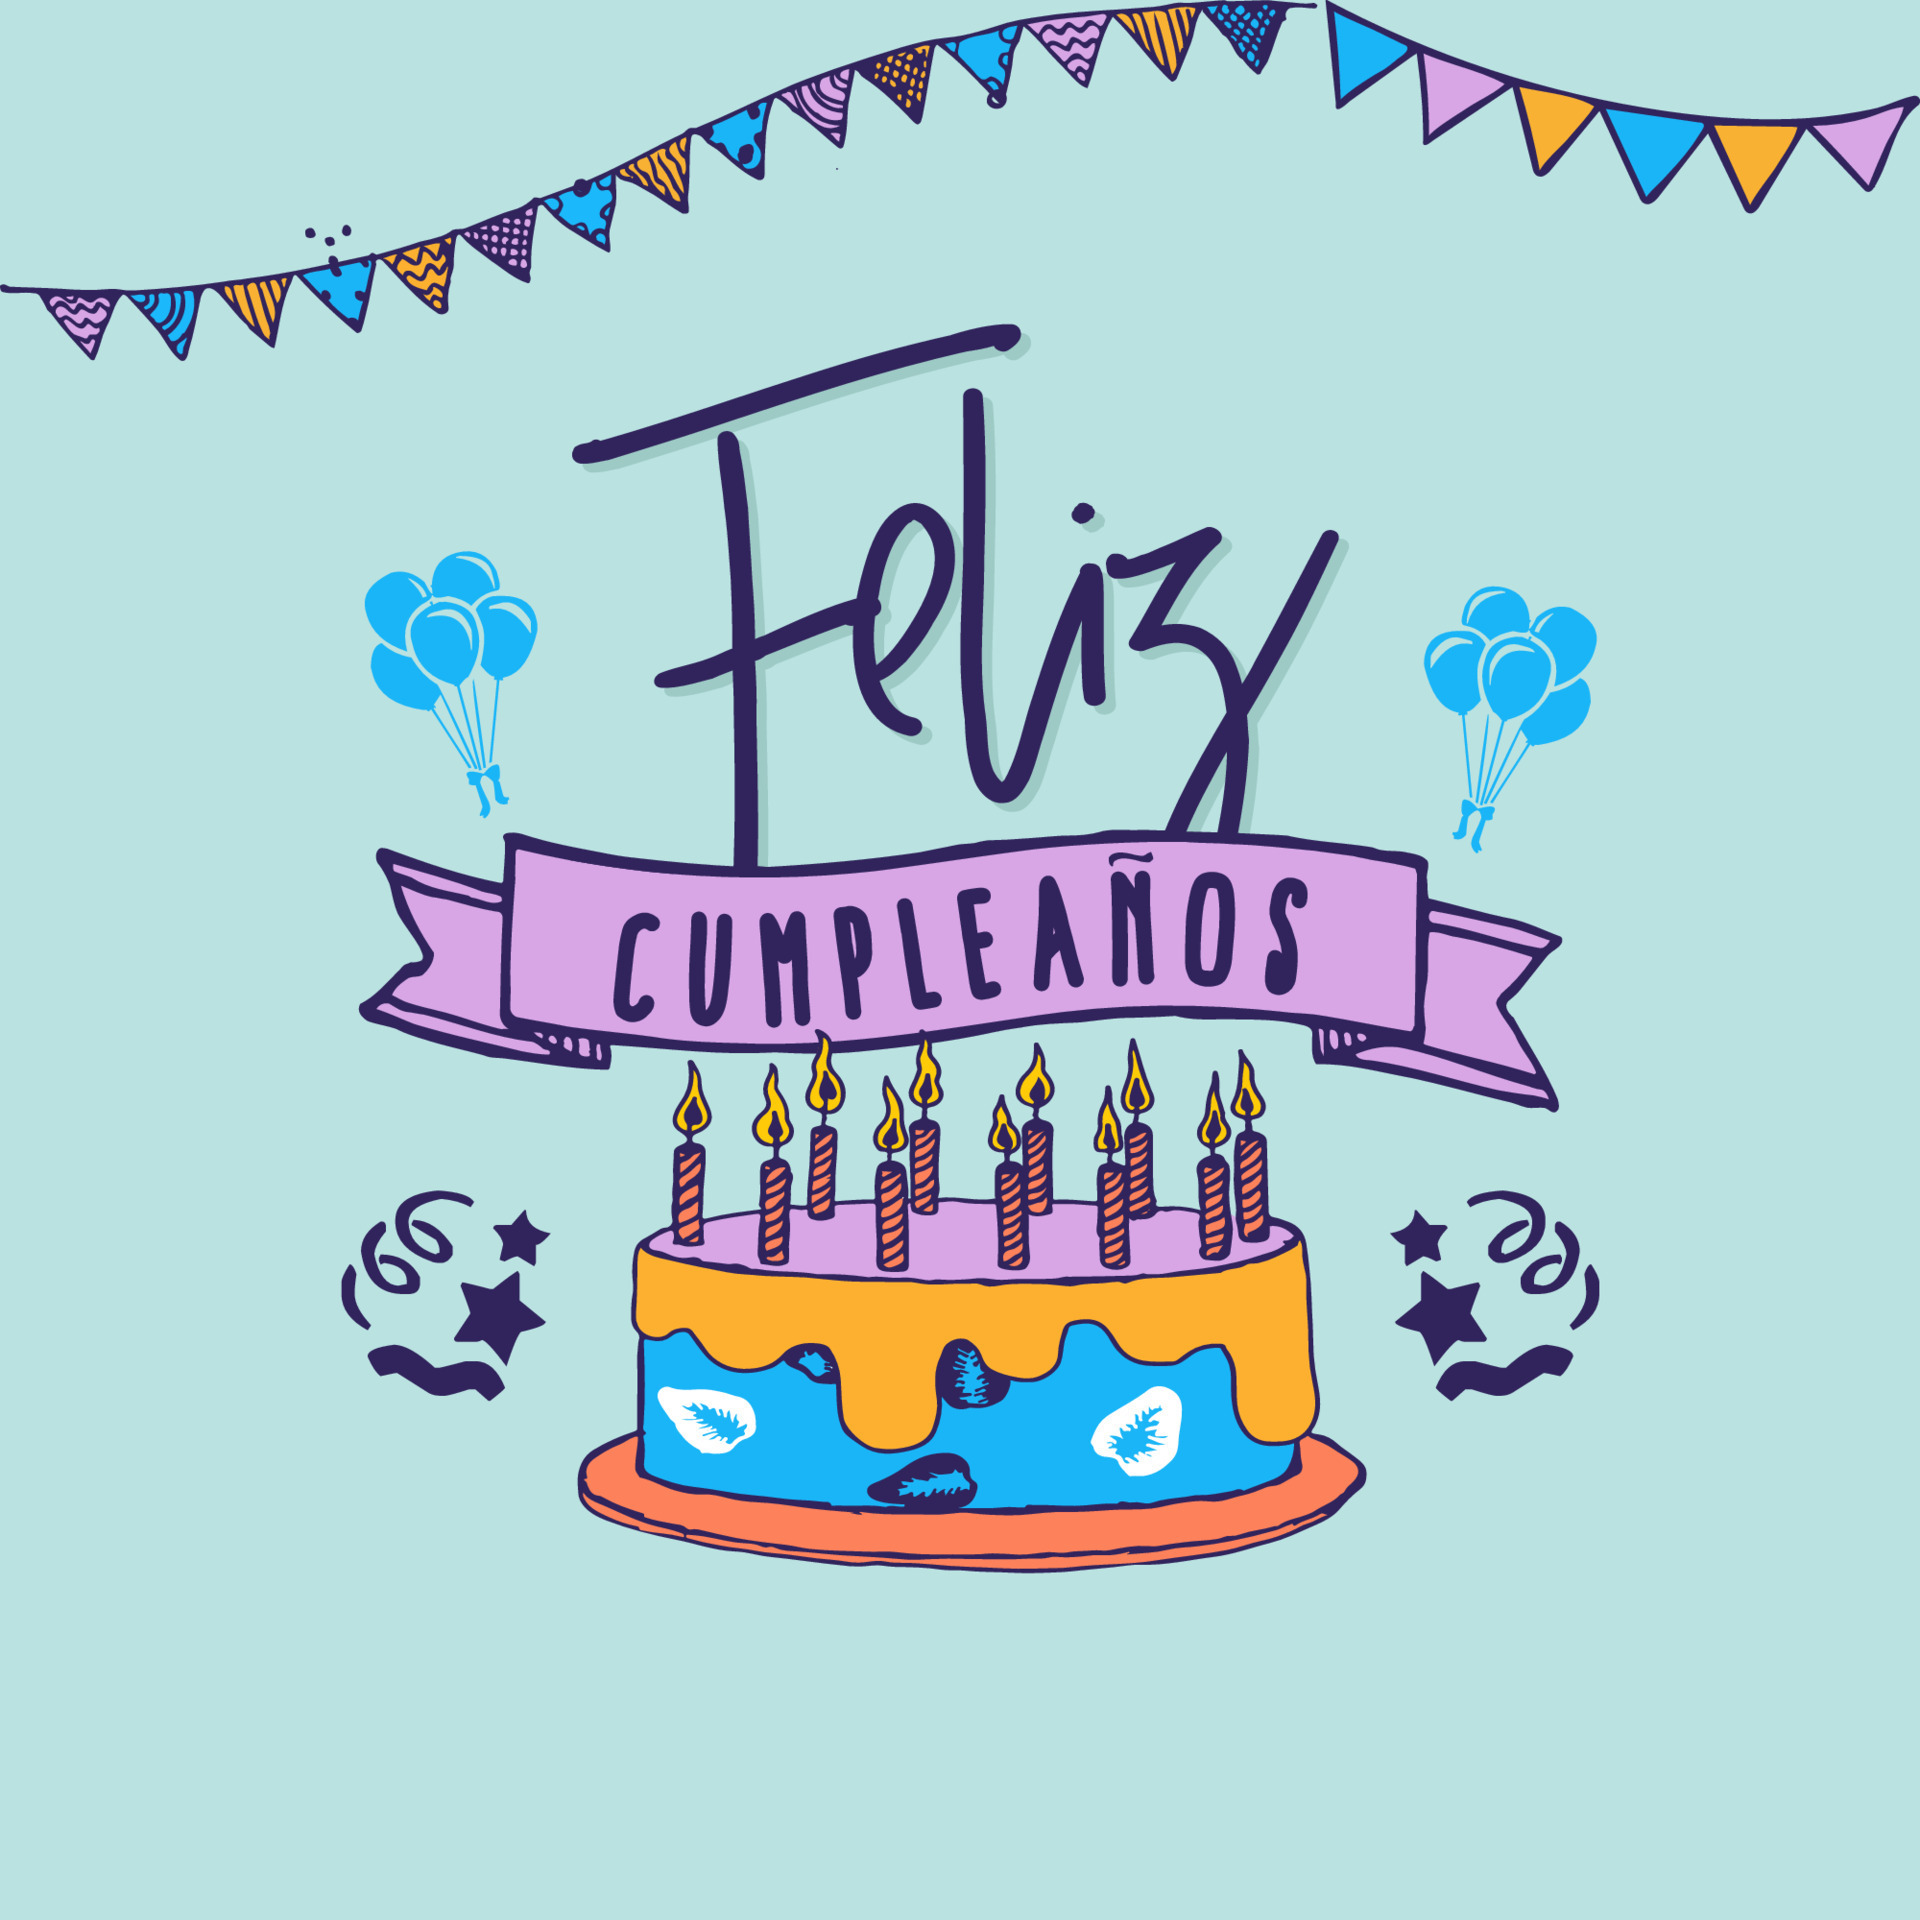 https://static.vecteezy.com/system/resources/previews/018/872/666/original/happy-birthday-feliz-cumpleanos-lettering-in-spanish-vector.jpg